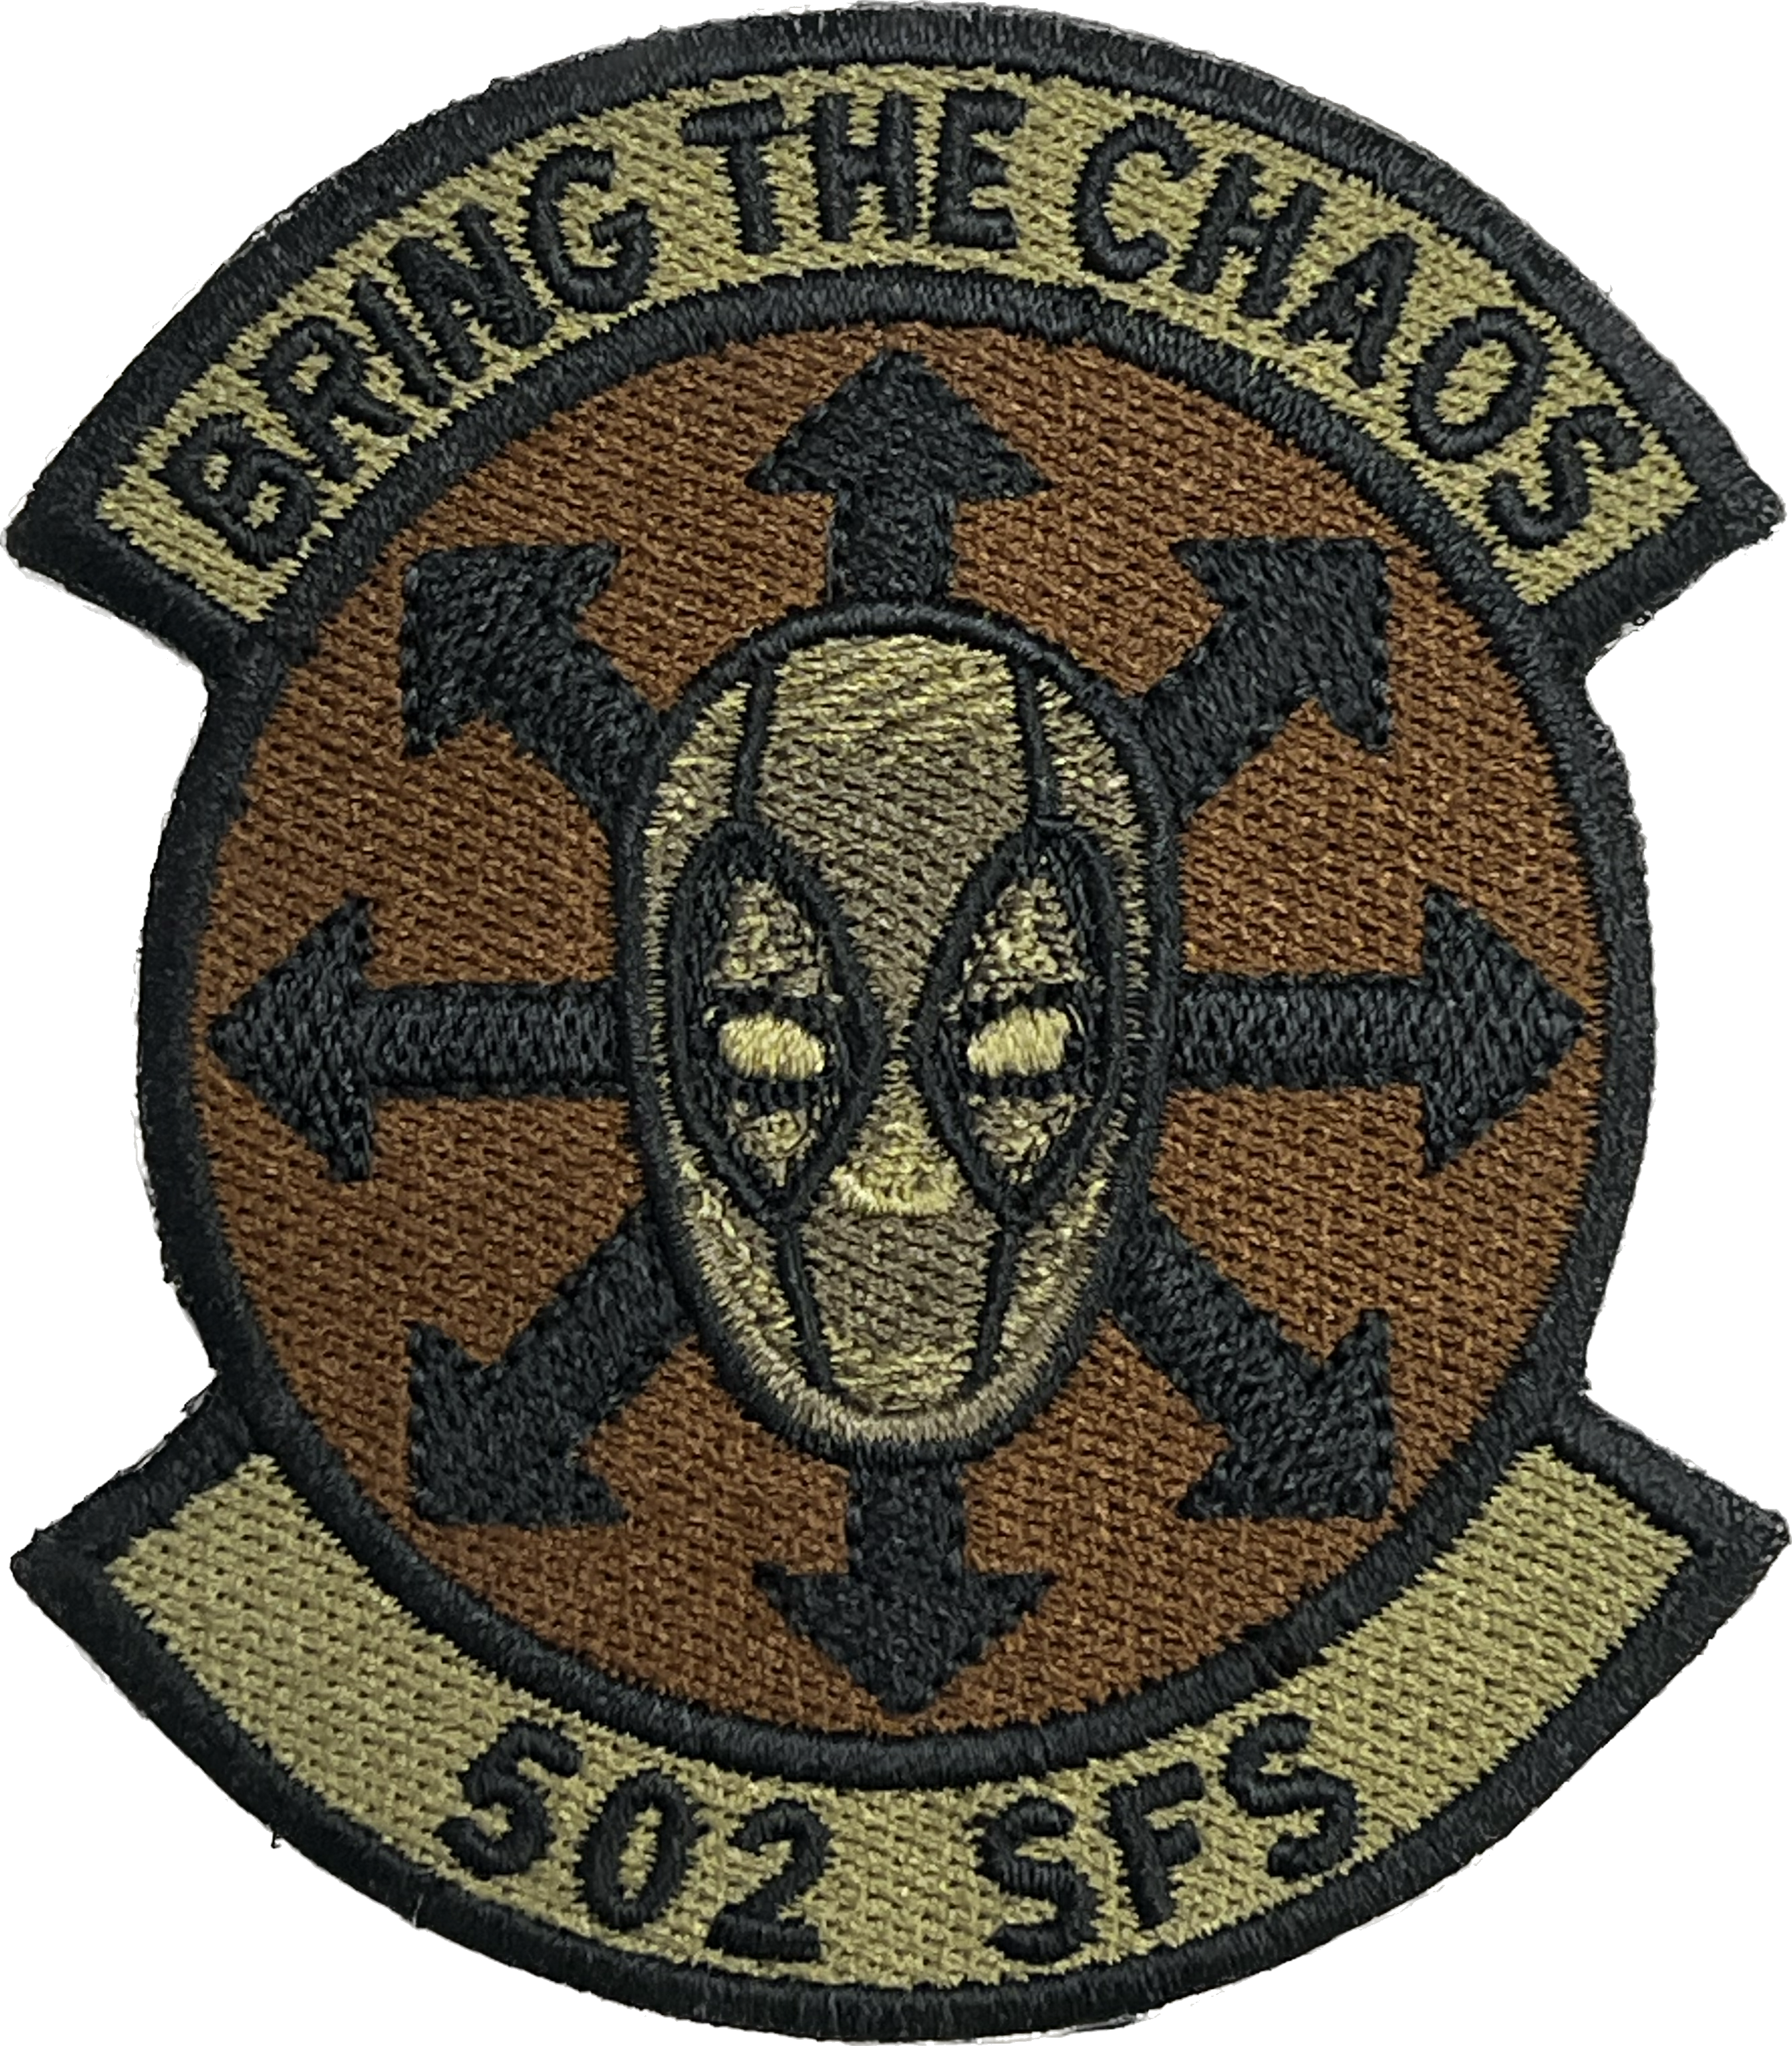 502 SFS - Bring The Chaos